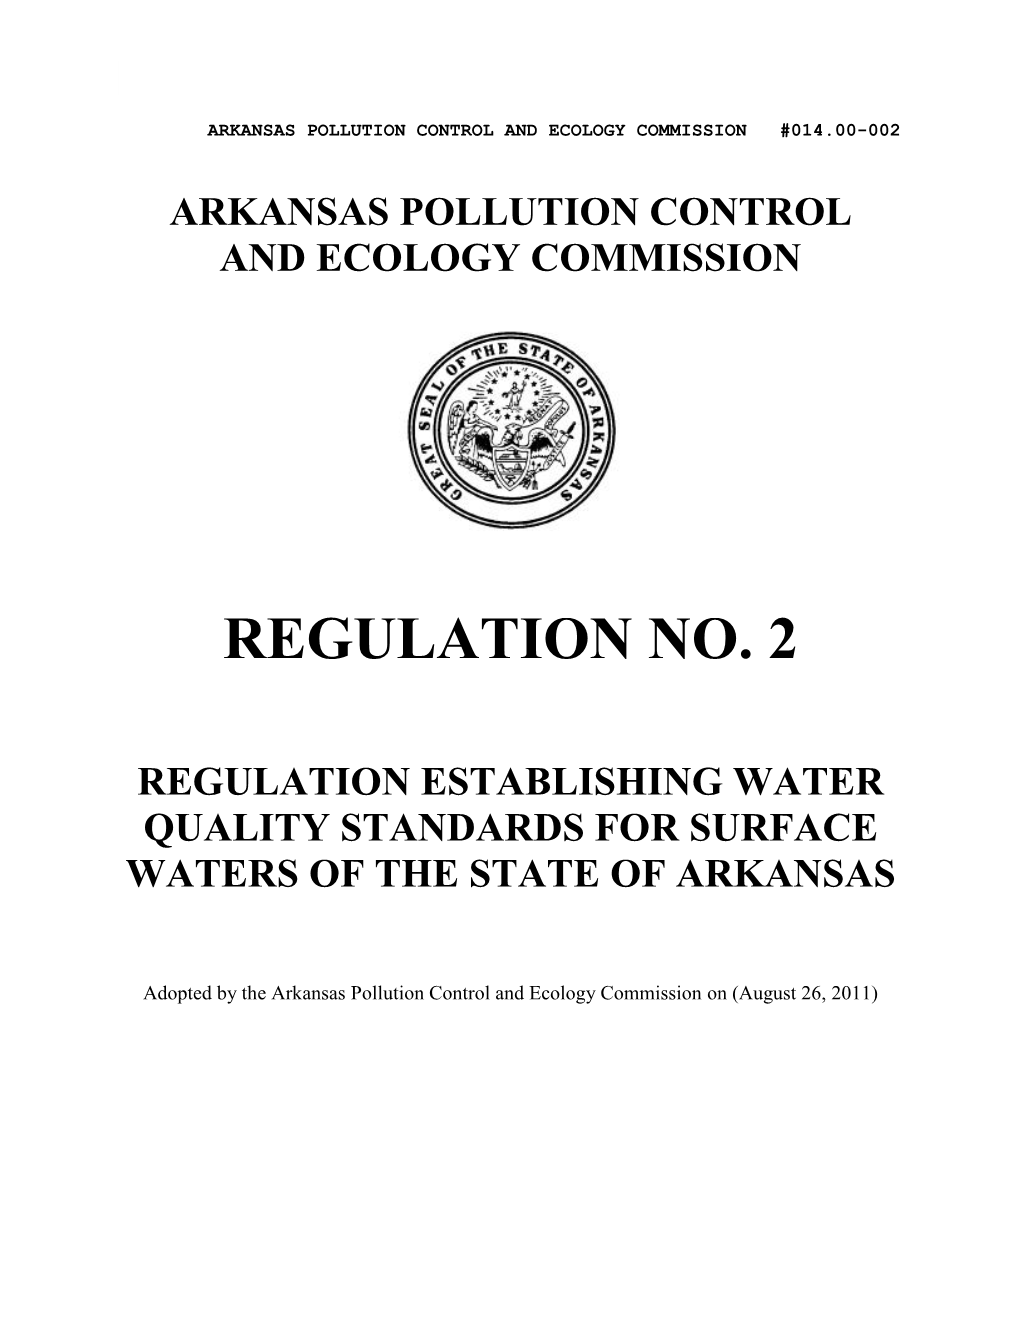 Regulation 2: Arkansas Water Quality